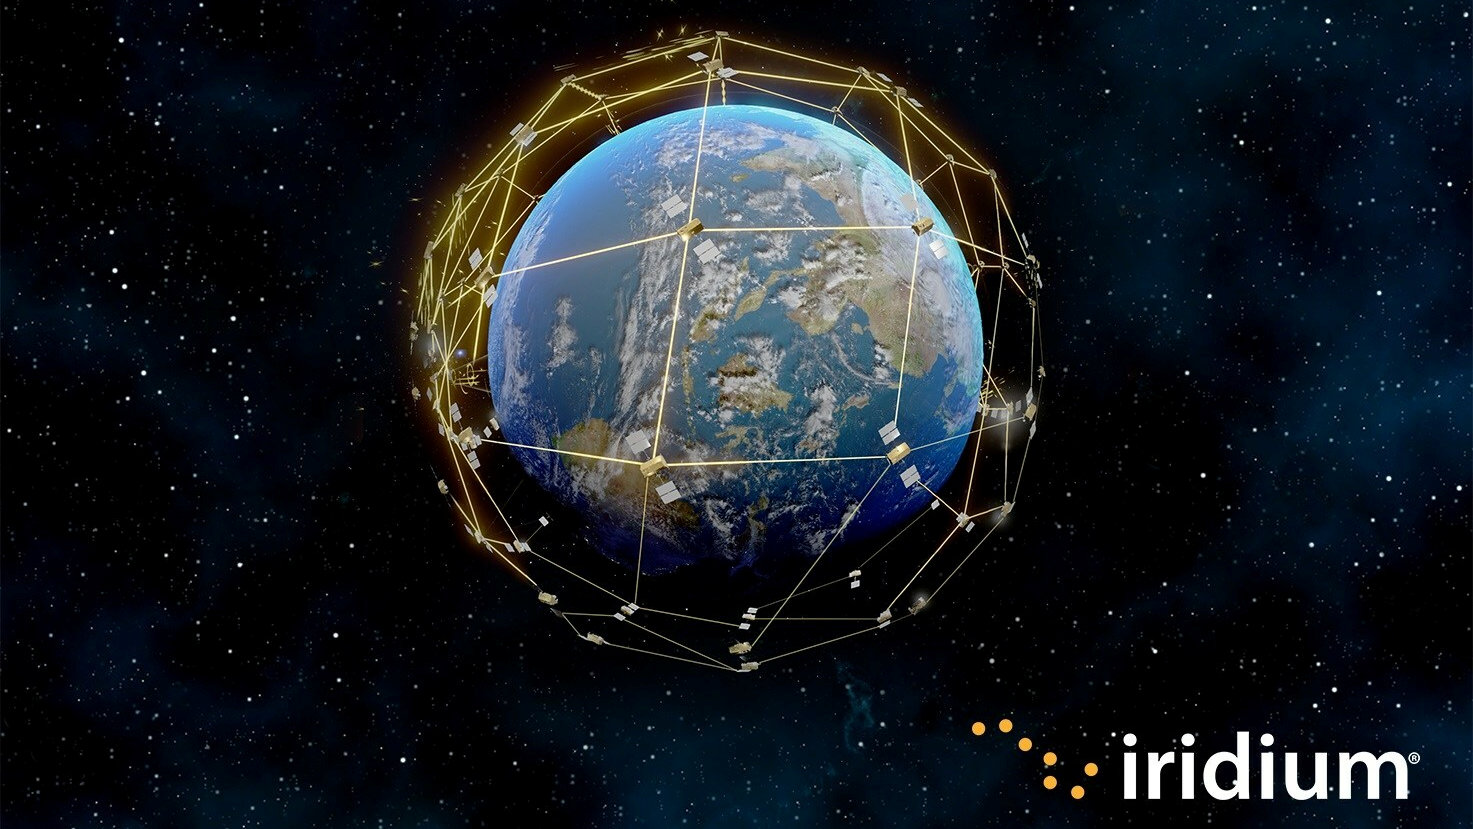 PLEO Satellite-Based Services Win for Iridium